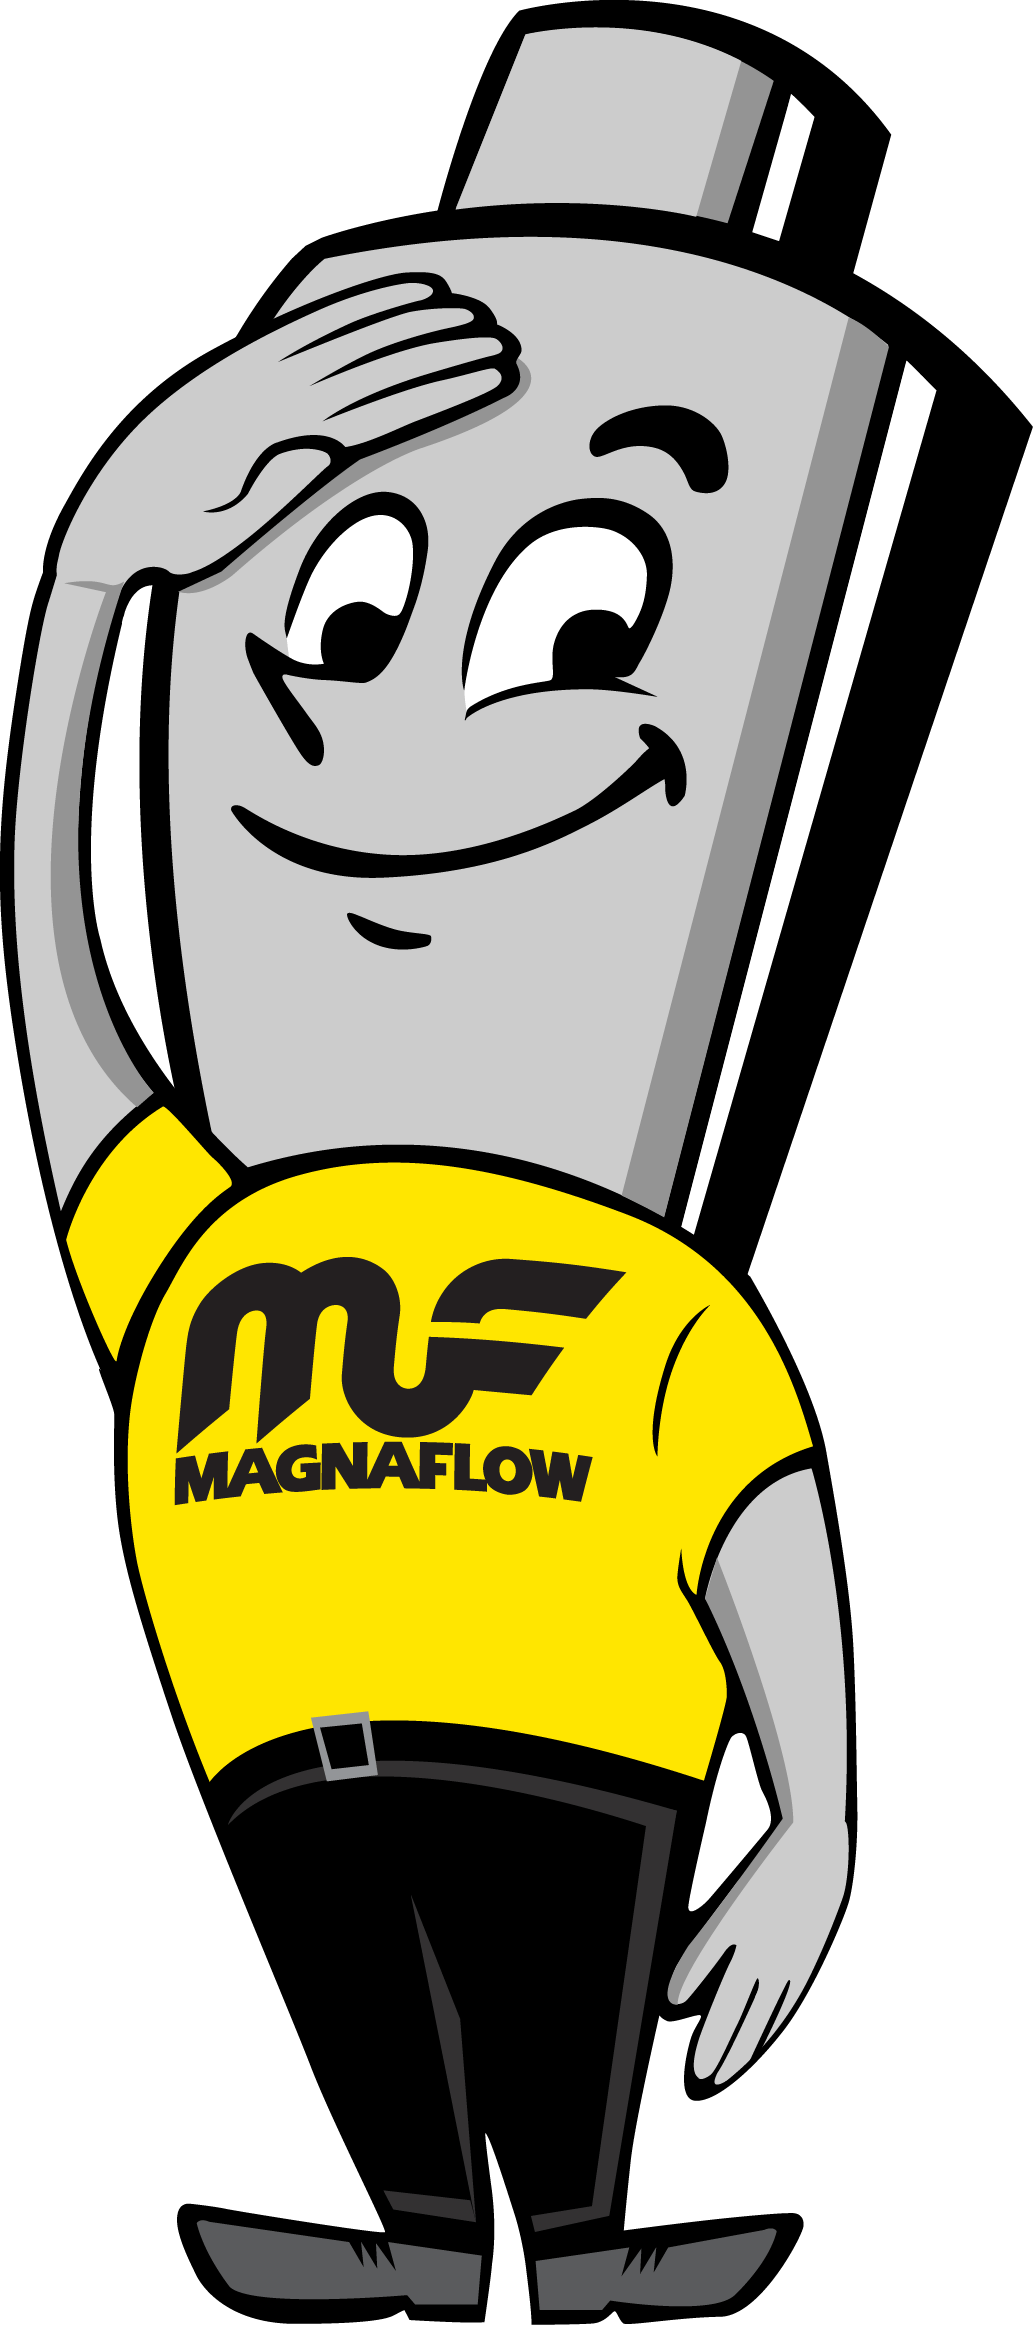 Magnaflow Logo - MagnaFlow Media Kit - Official Trademarks & Logos